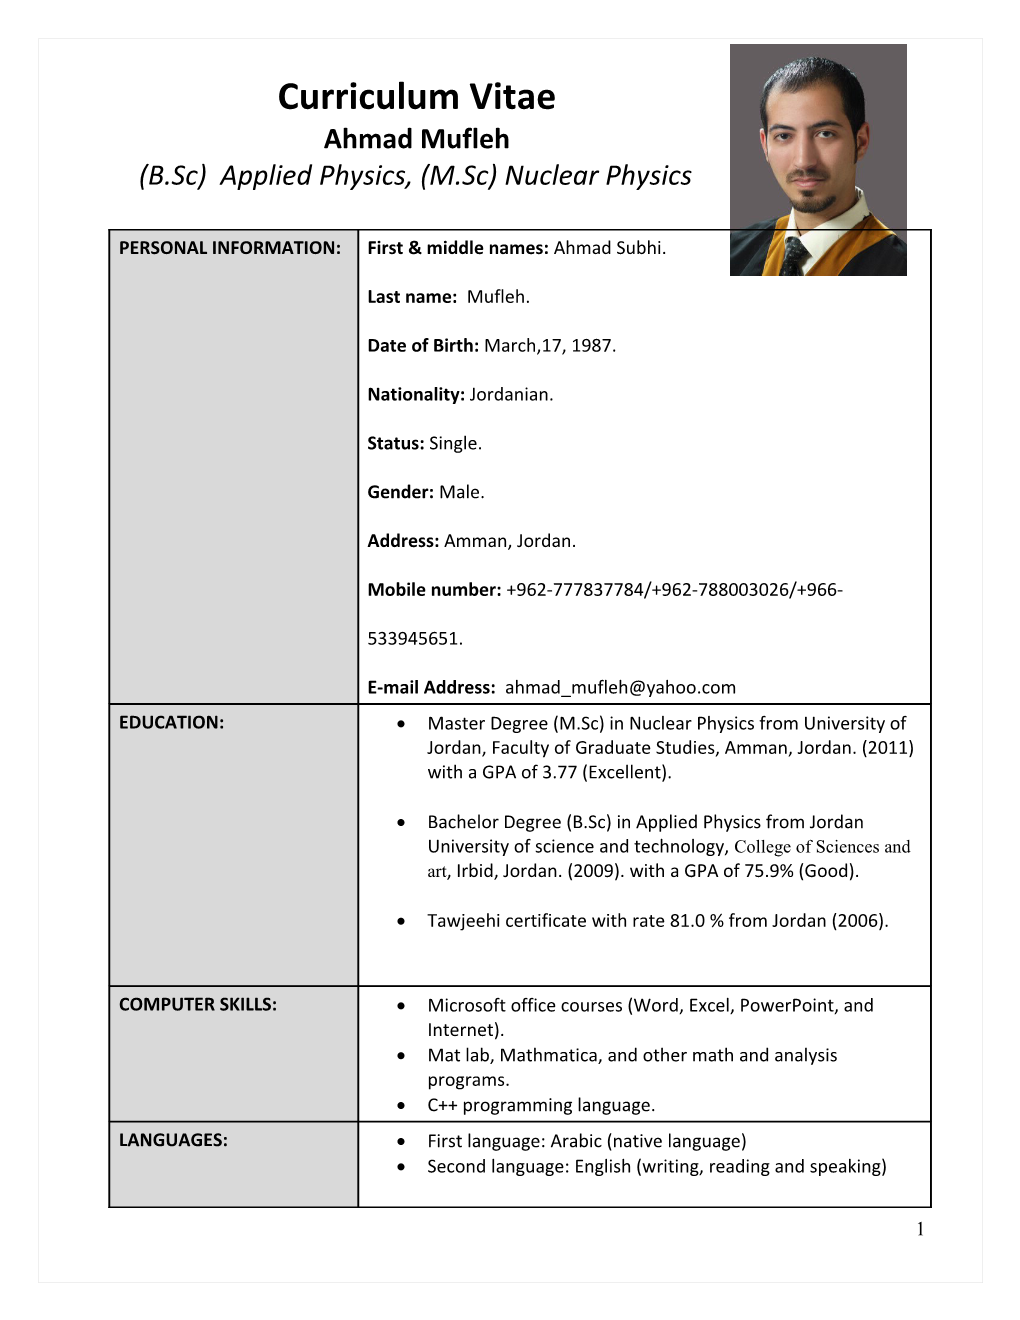 (B.Sc) Appliedphysics, (M.Sc)Nuclear Physics